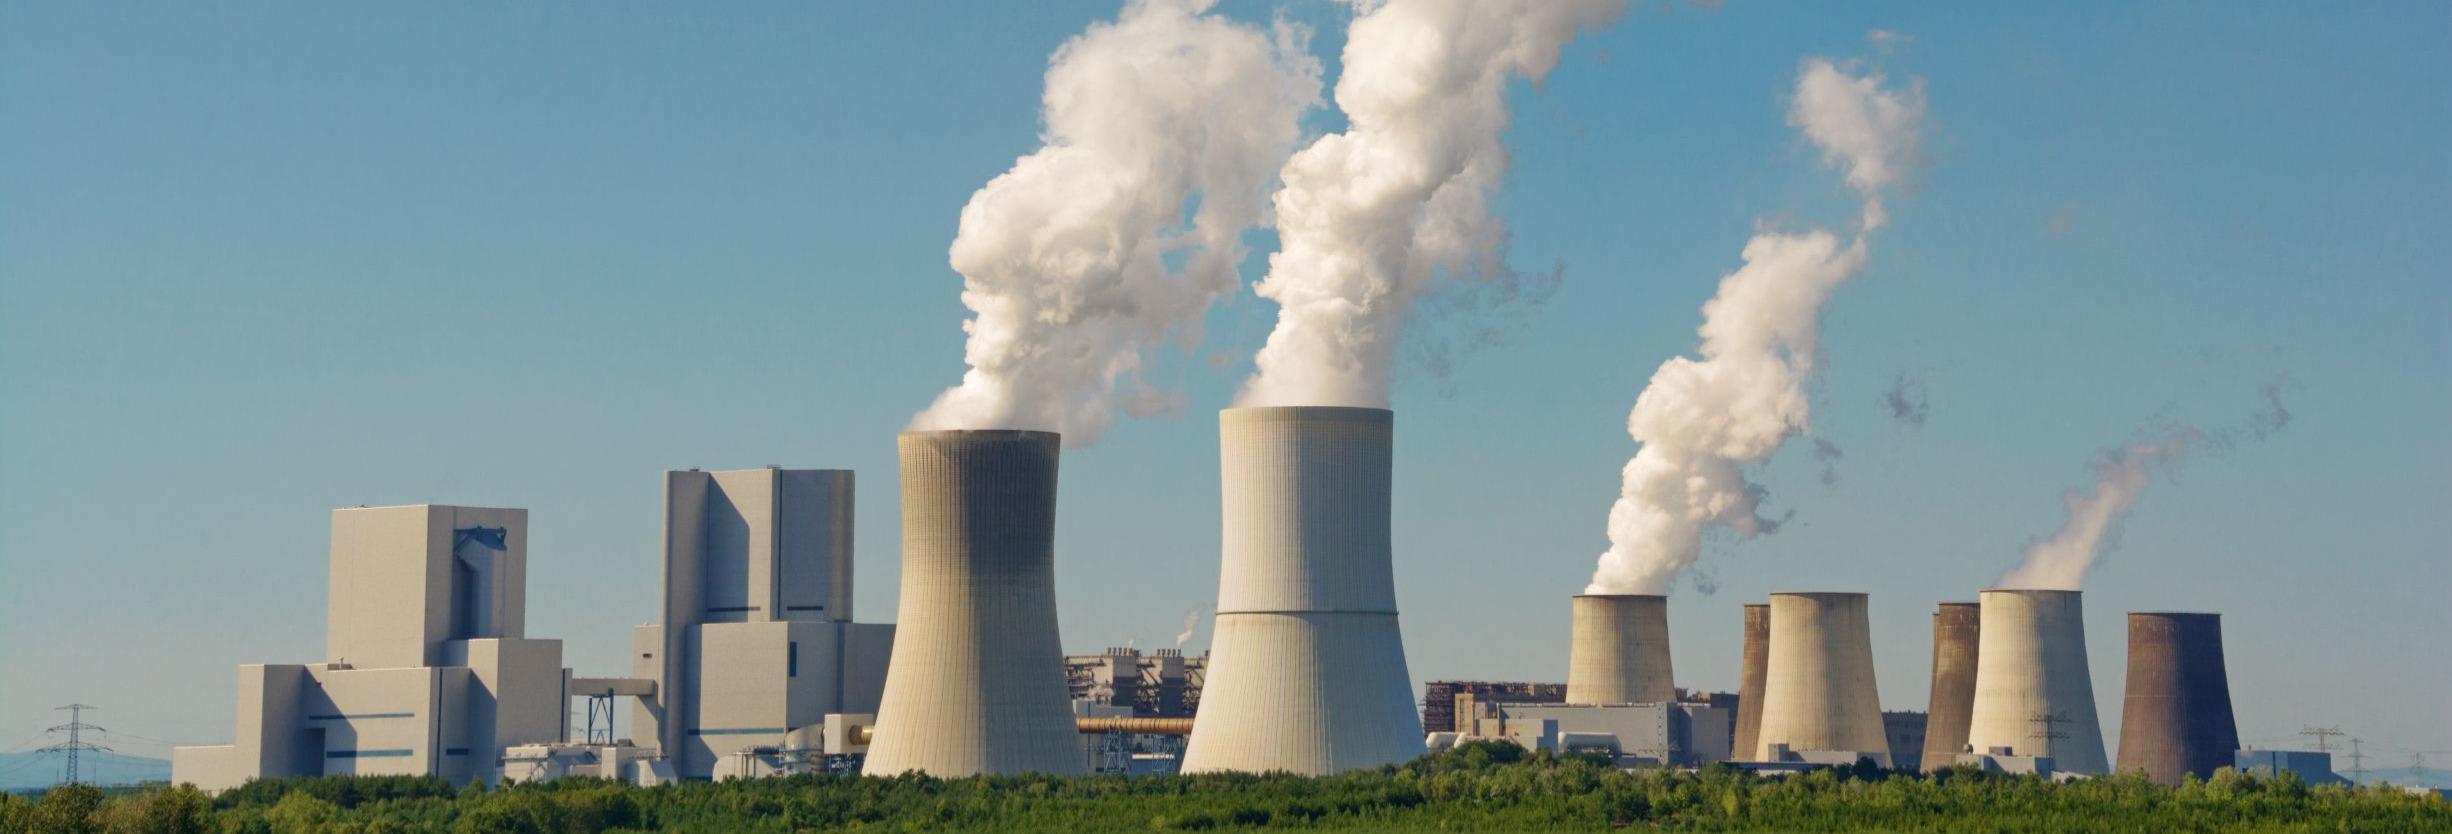 Panoramabild von Kohlekraftwerk